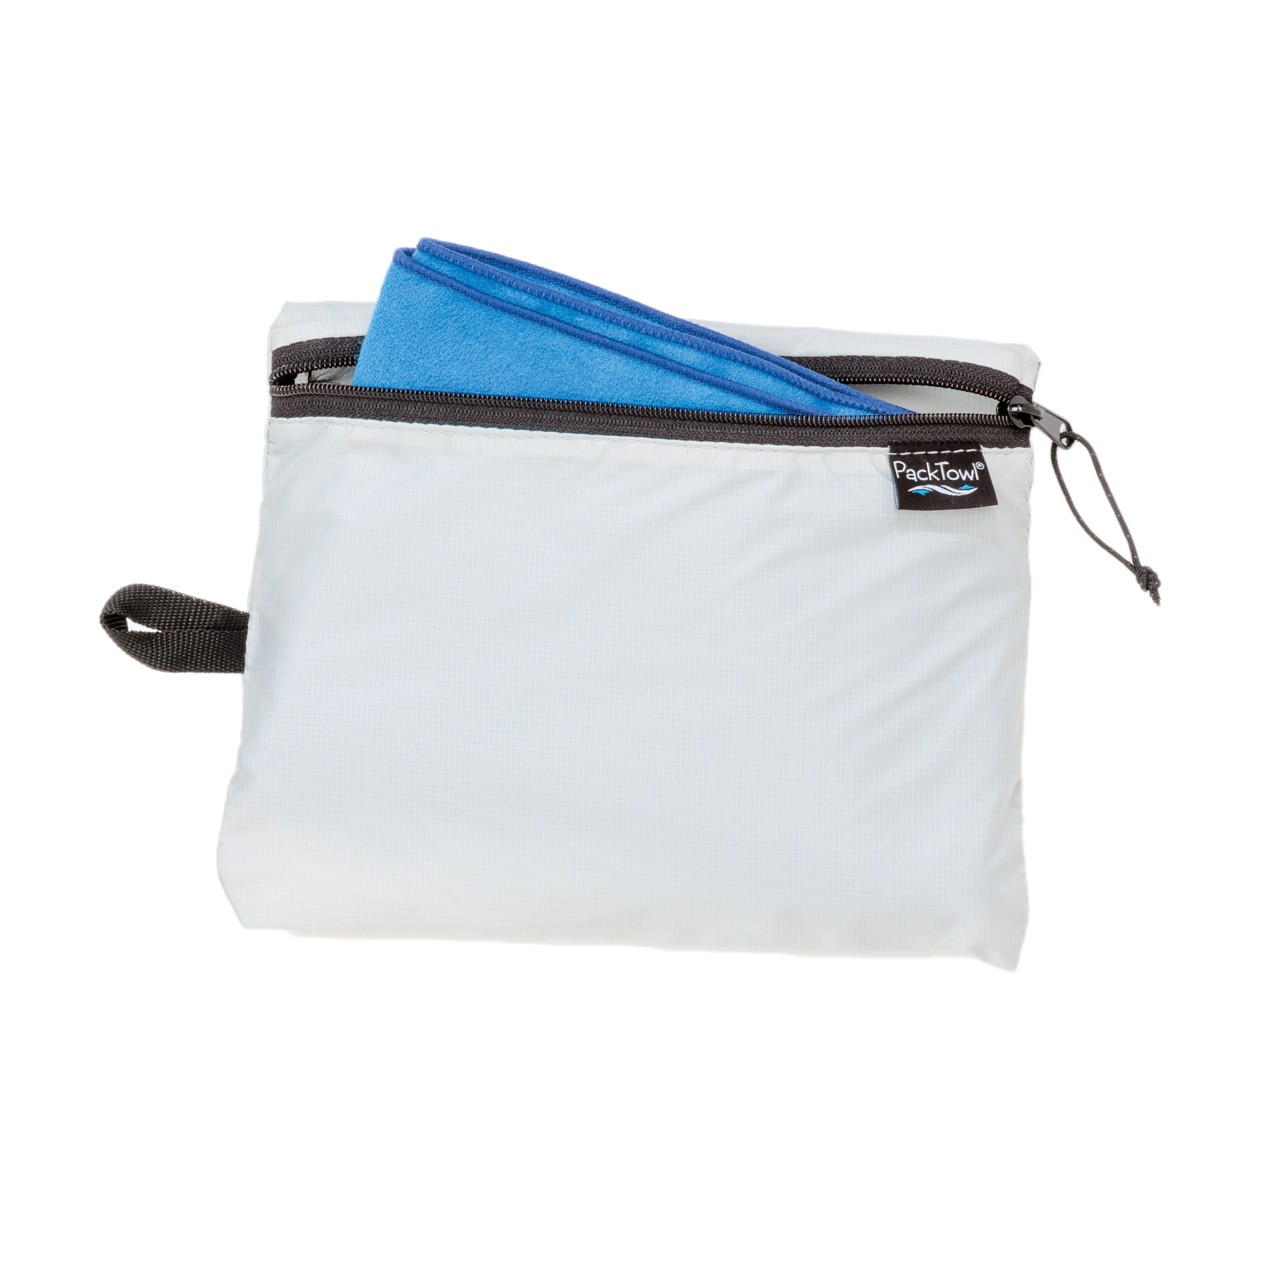 PackTowl Personal Handtuch Angebot - Cirus, L (Hand)